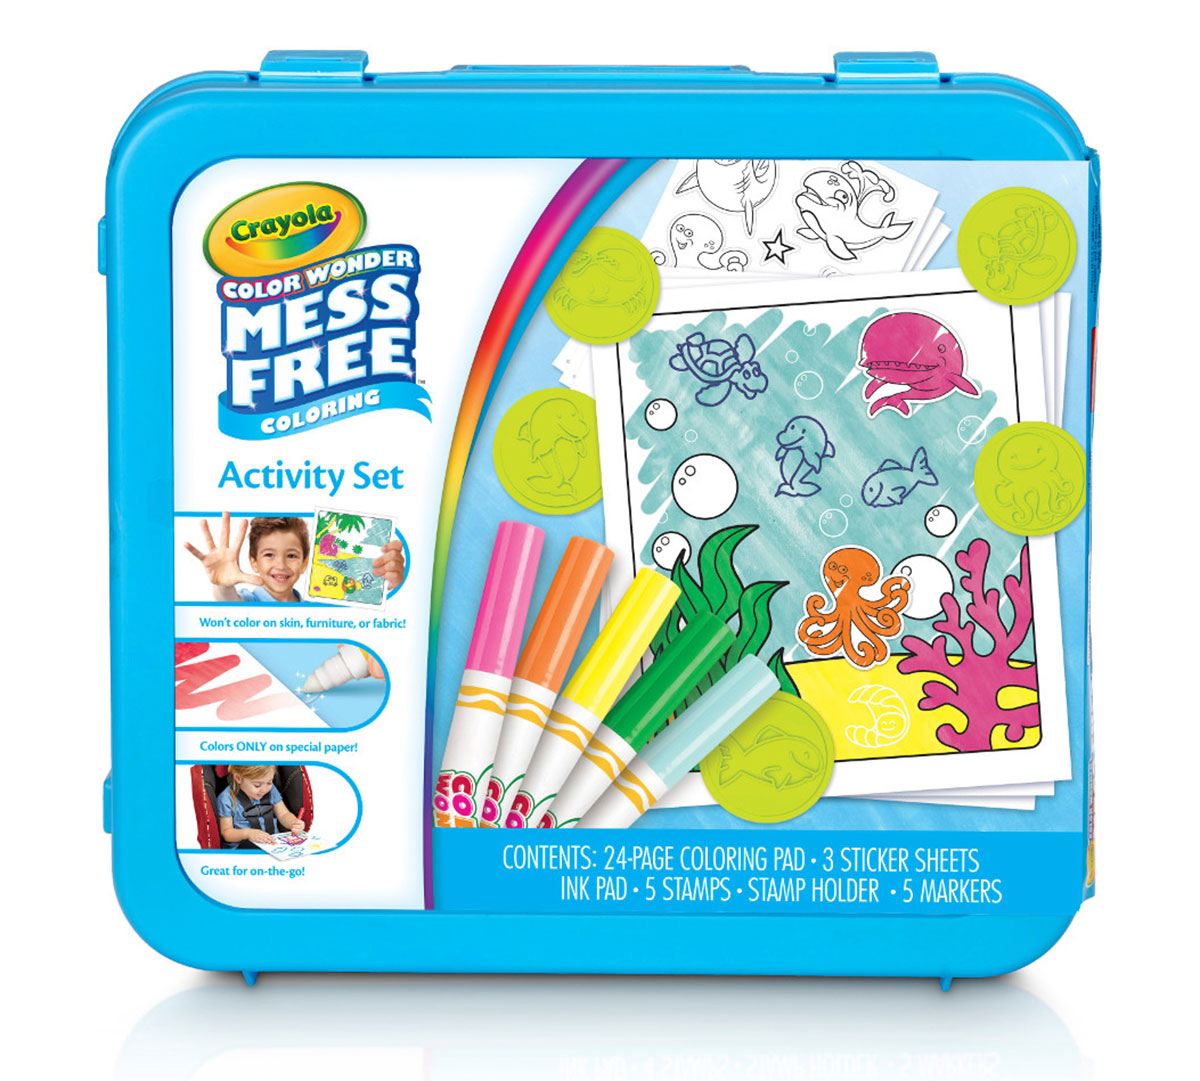 color-wonder-art-kit-mess-free-coloring-gift-crayola-crayola